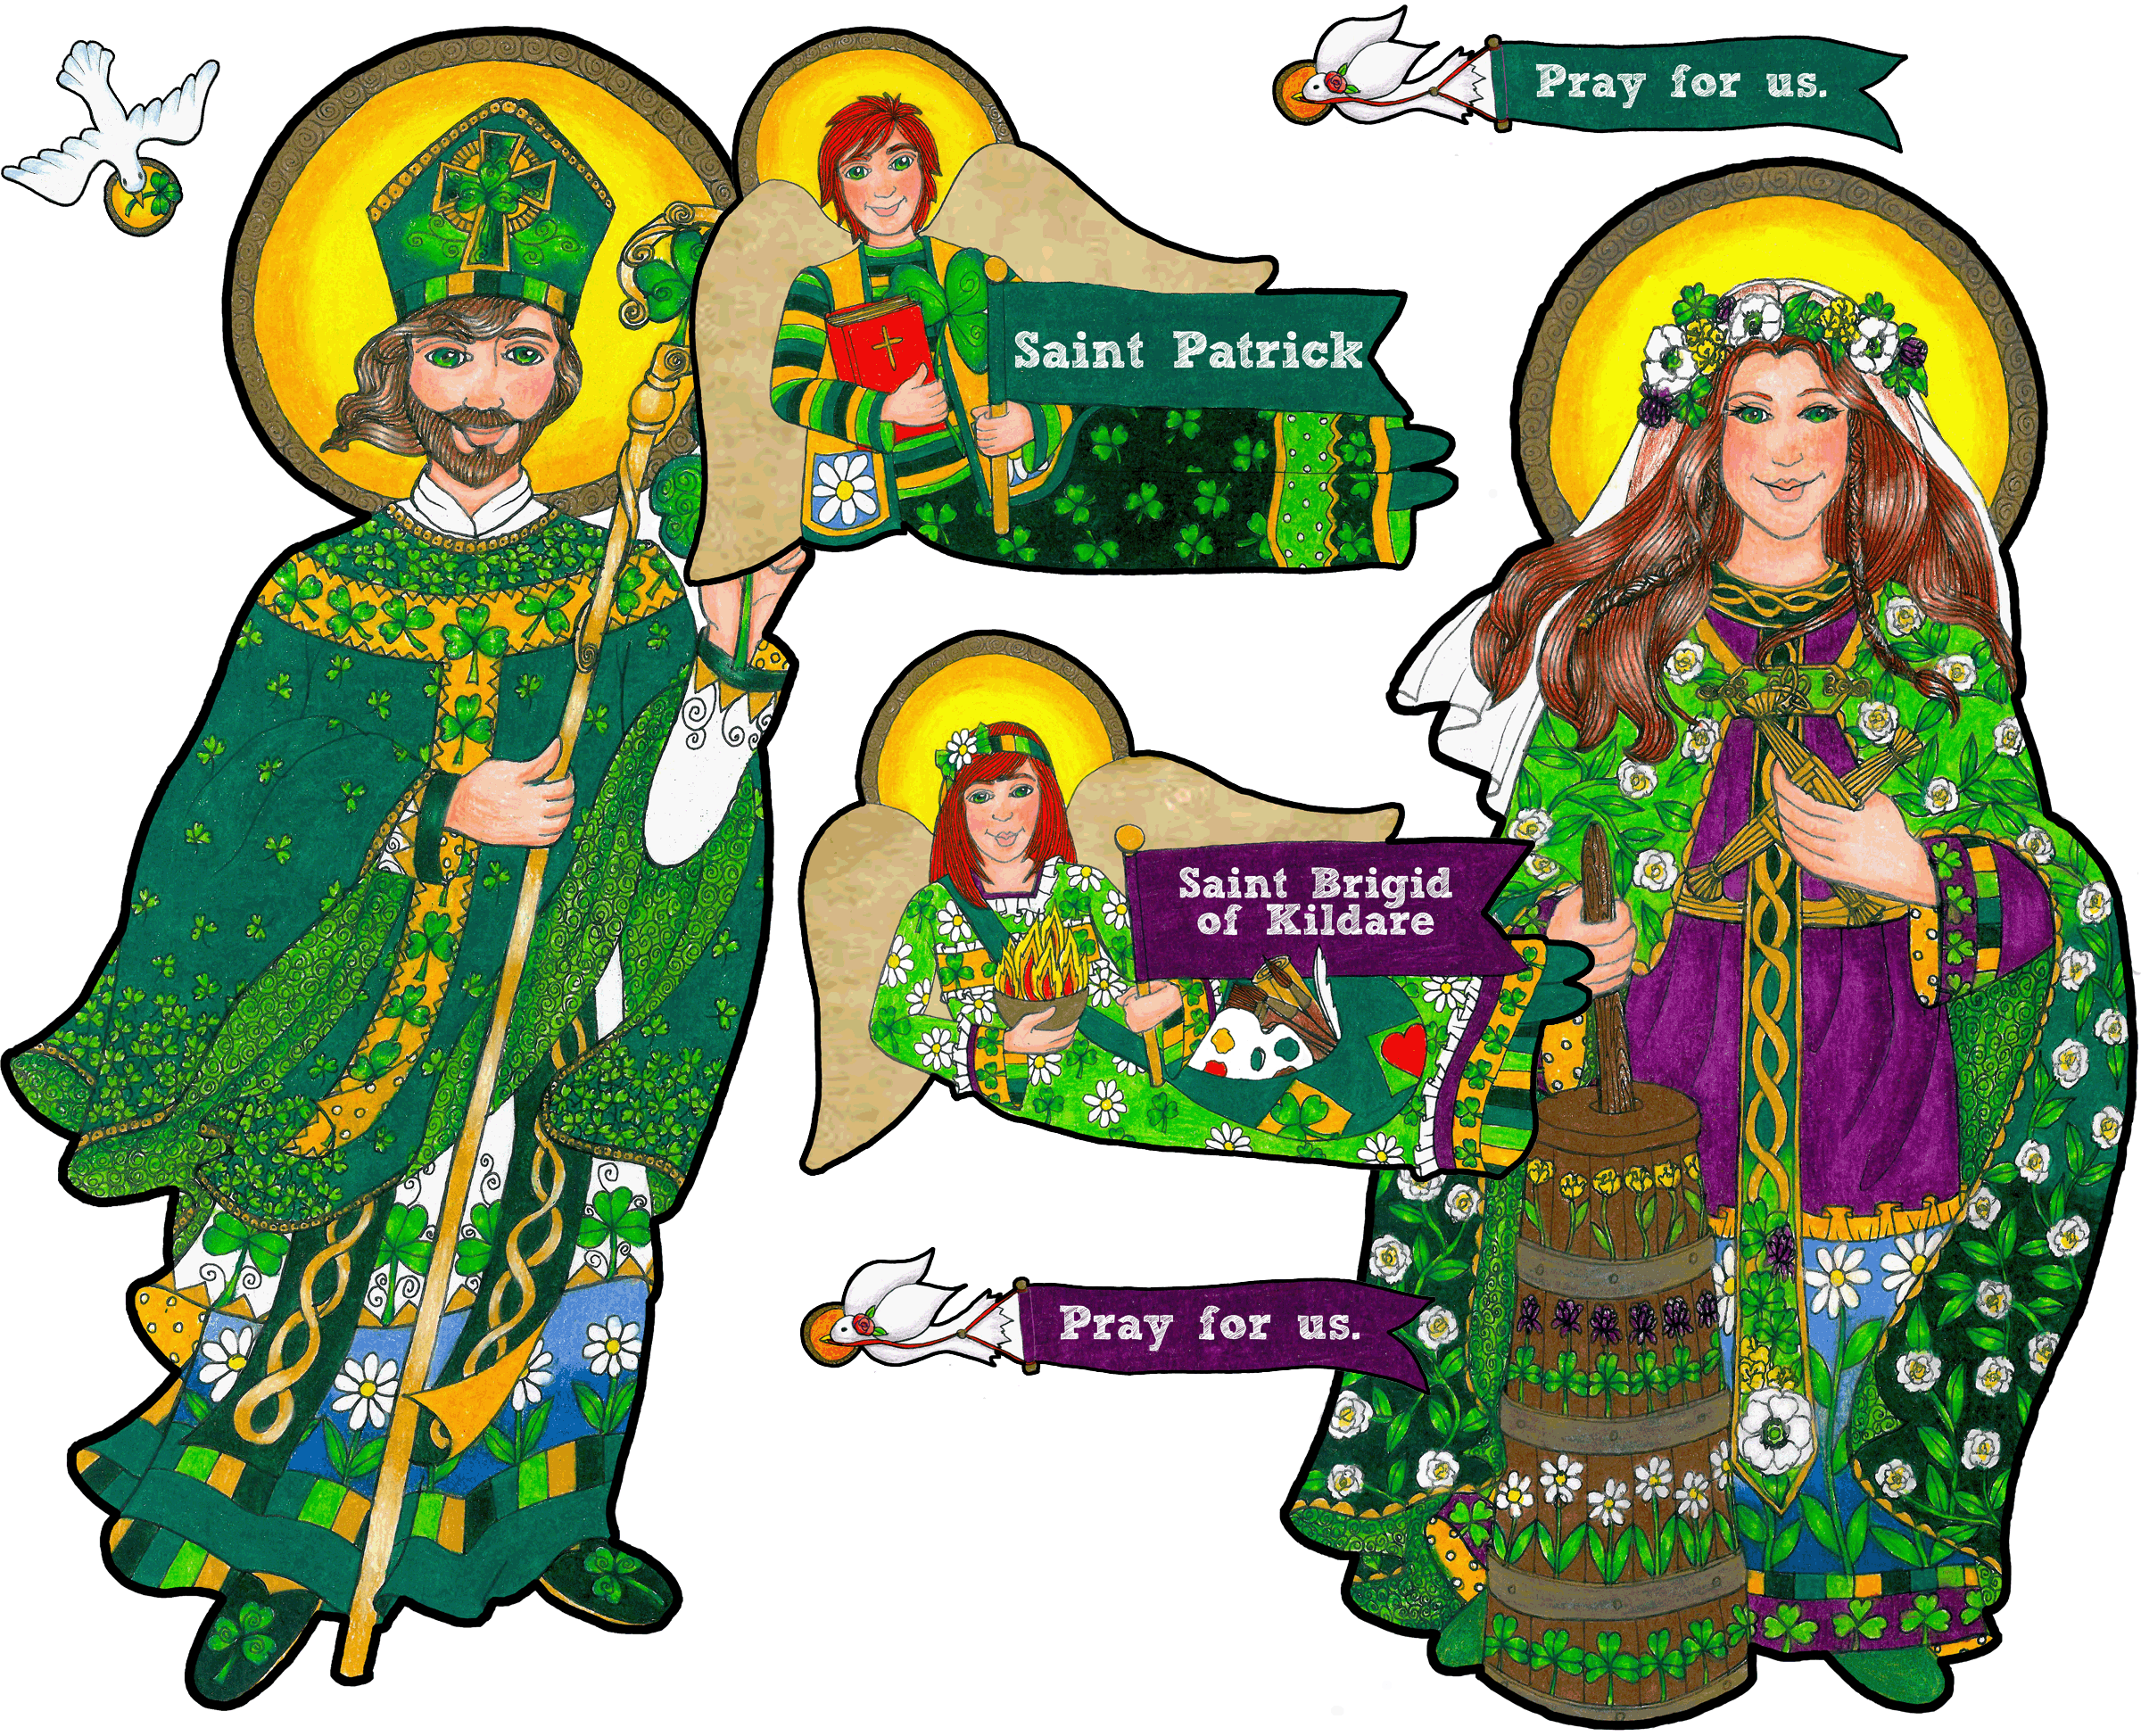 Boho Saint Patrick and Brigid Combo